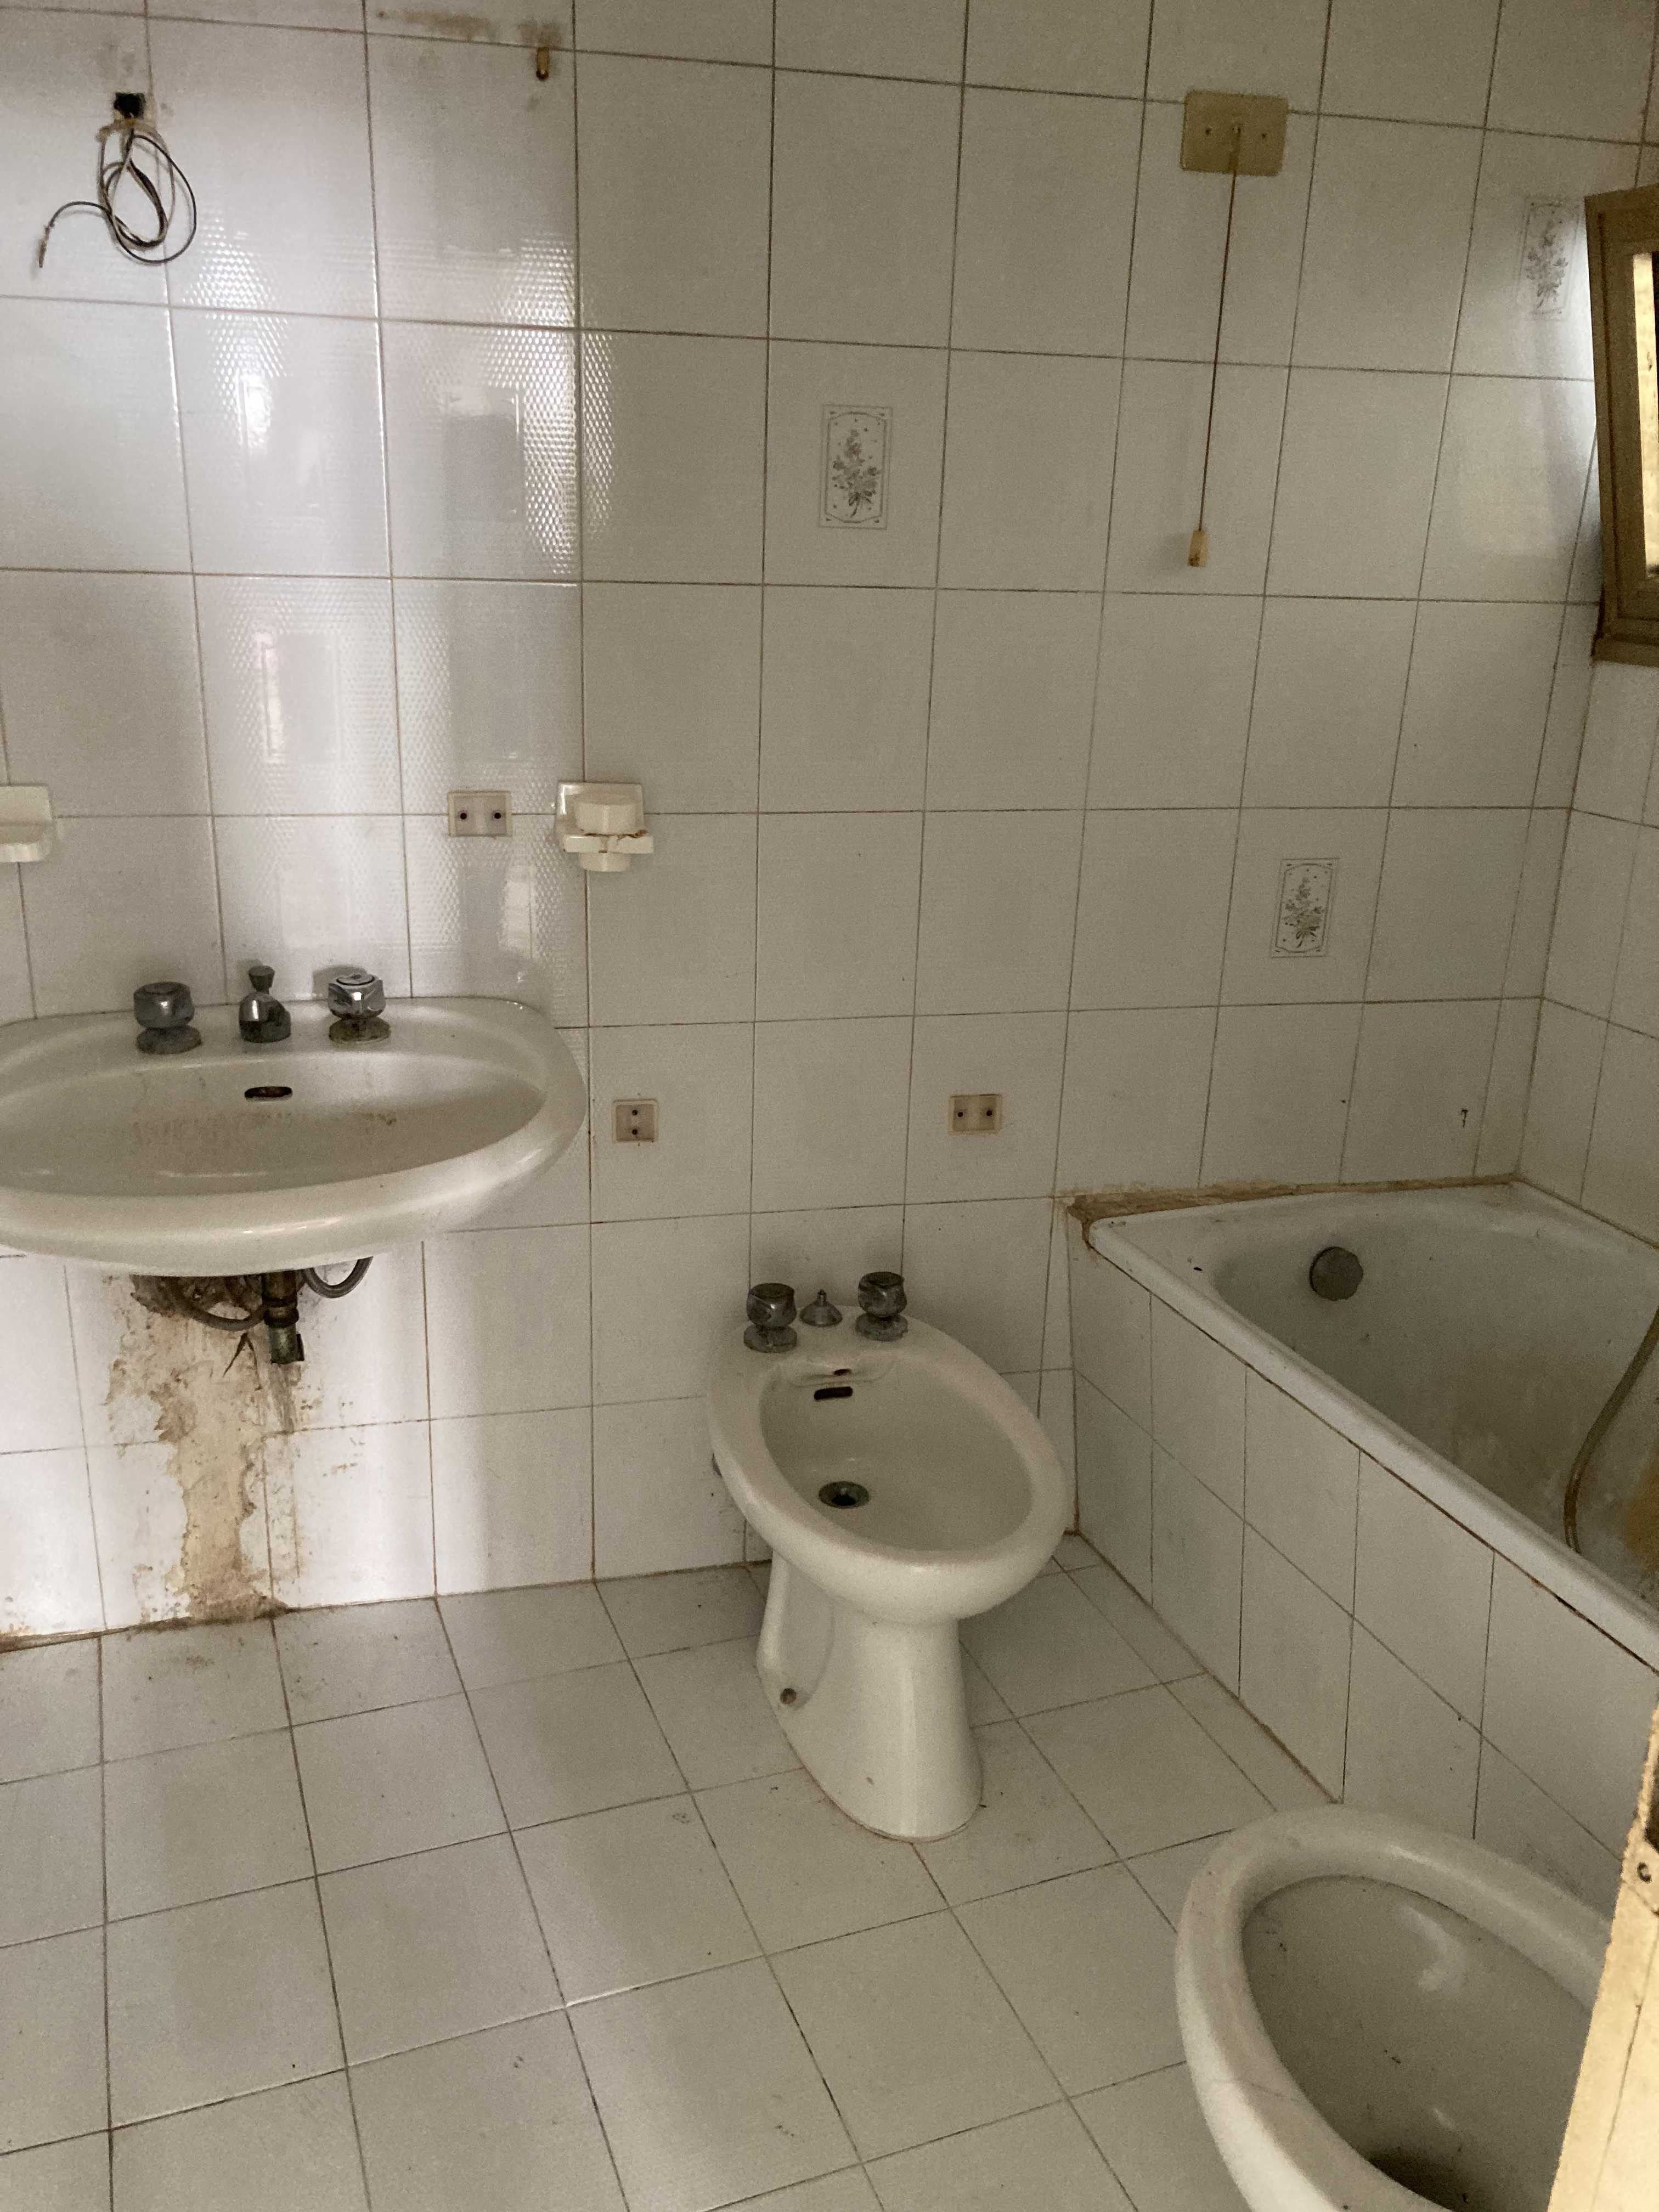 Vendite Salento: Vendita appartamento (Salve) - bagno